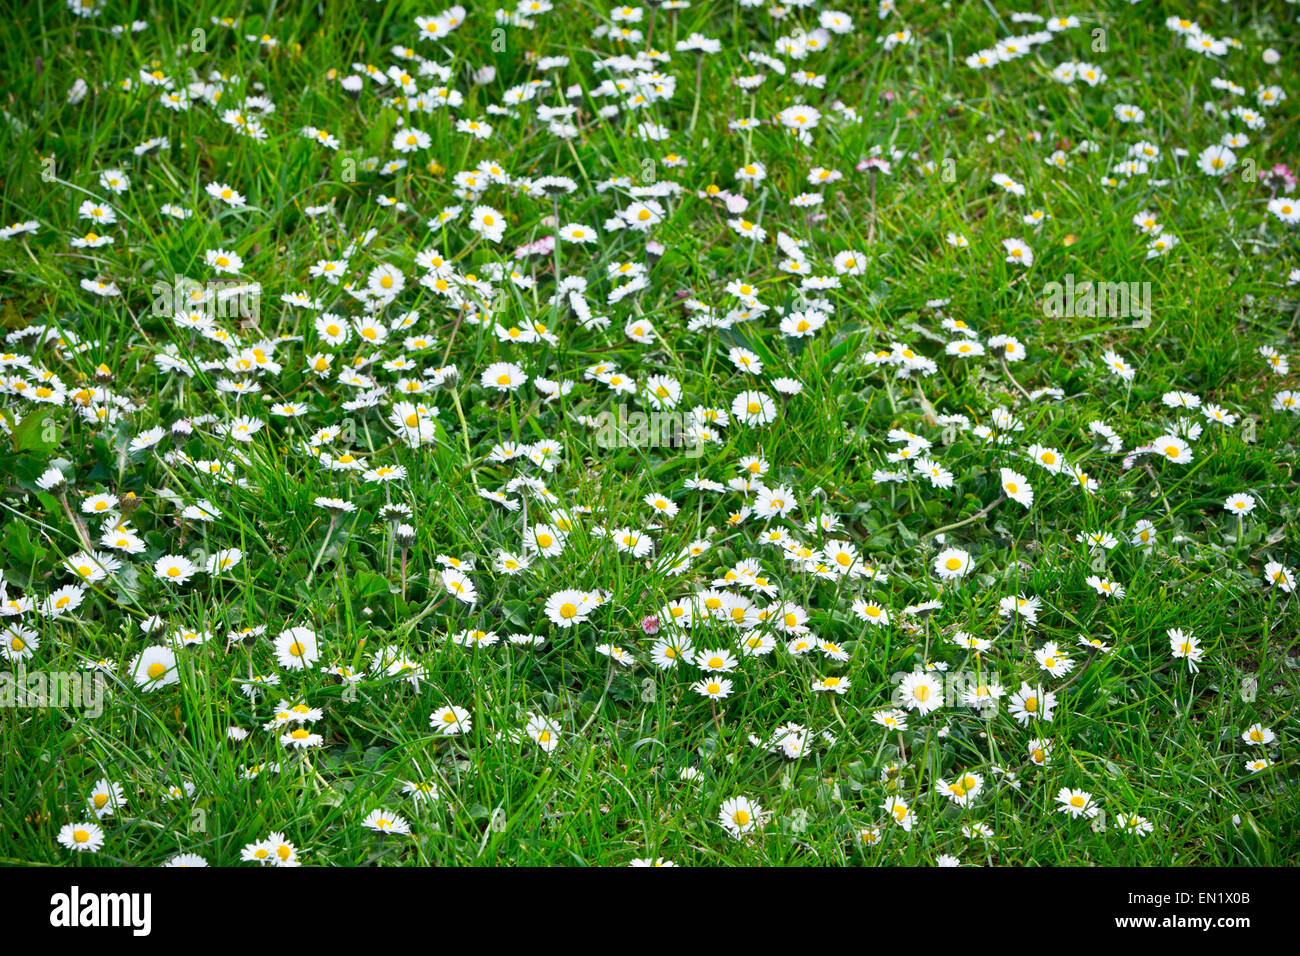 Daisy flores margaritas de césped Foto de stock